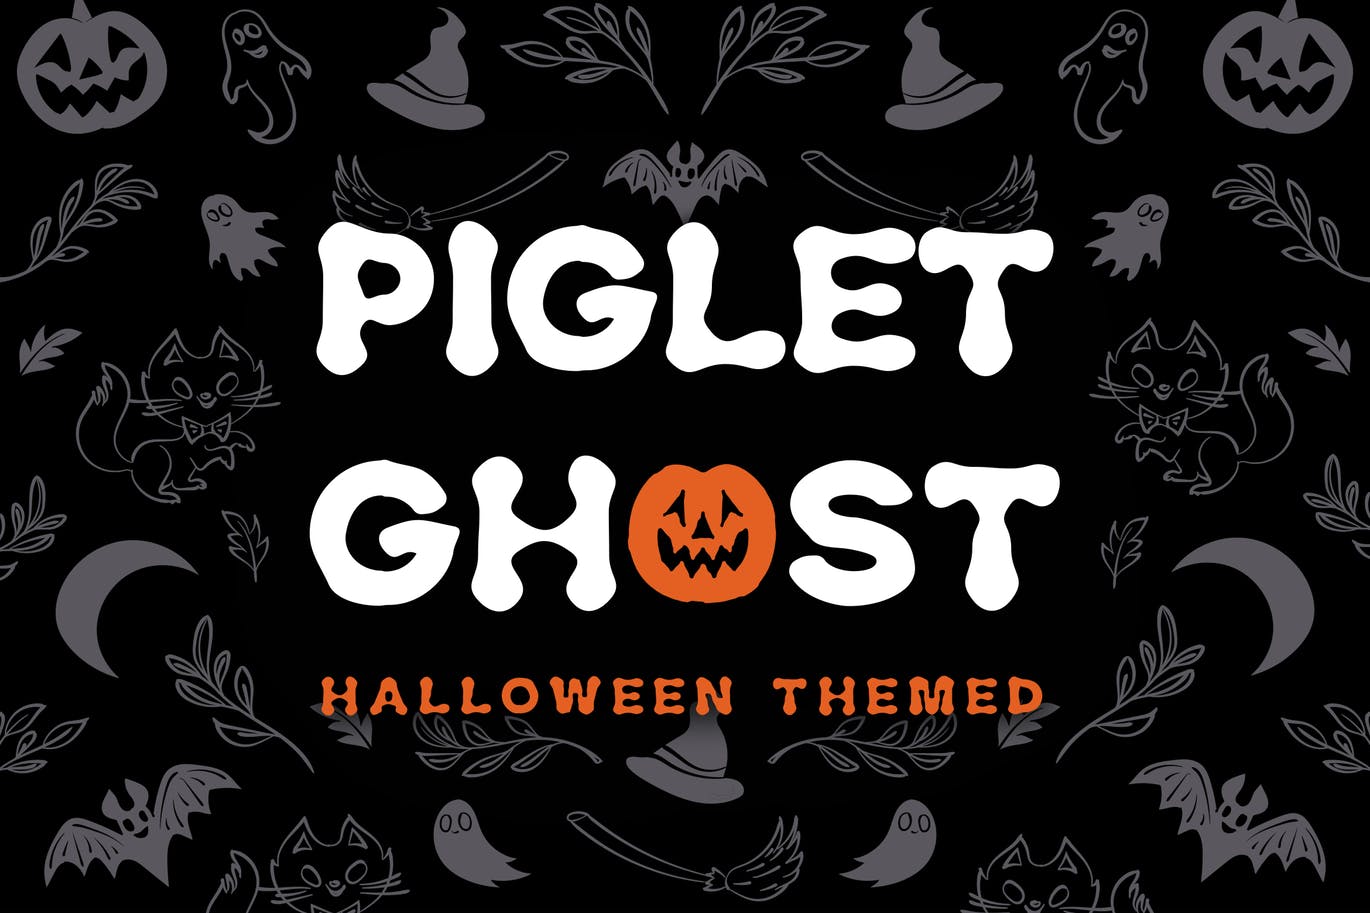 Halloween themed font